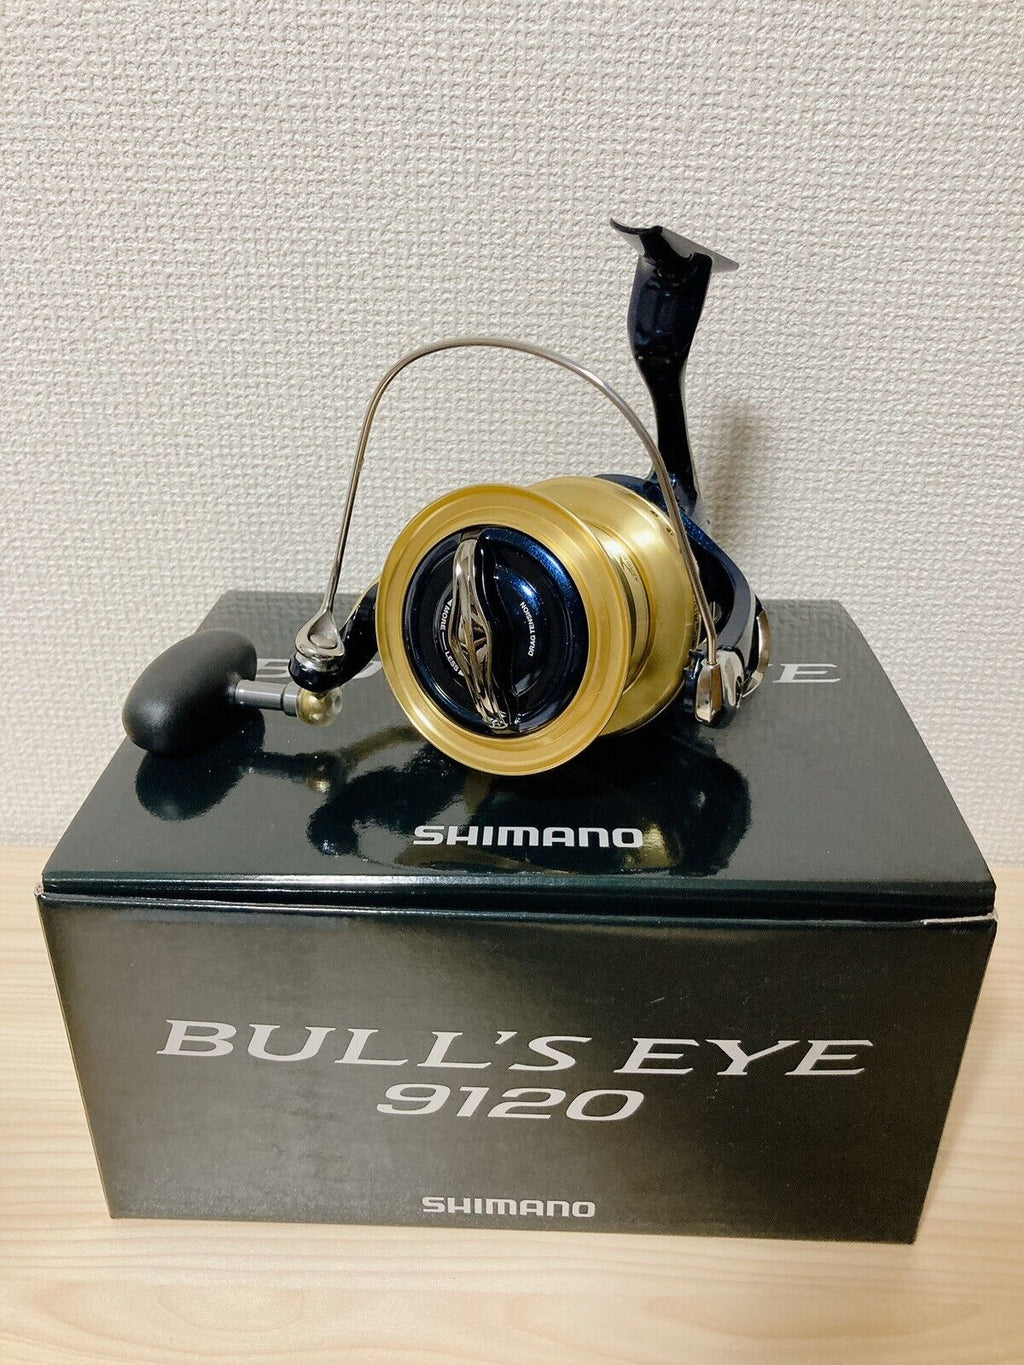 Shimano Spinning Reel 14 Bullseye 9120 Gear Ratio 3.5 Fishing Reel